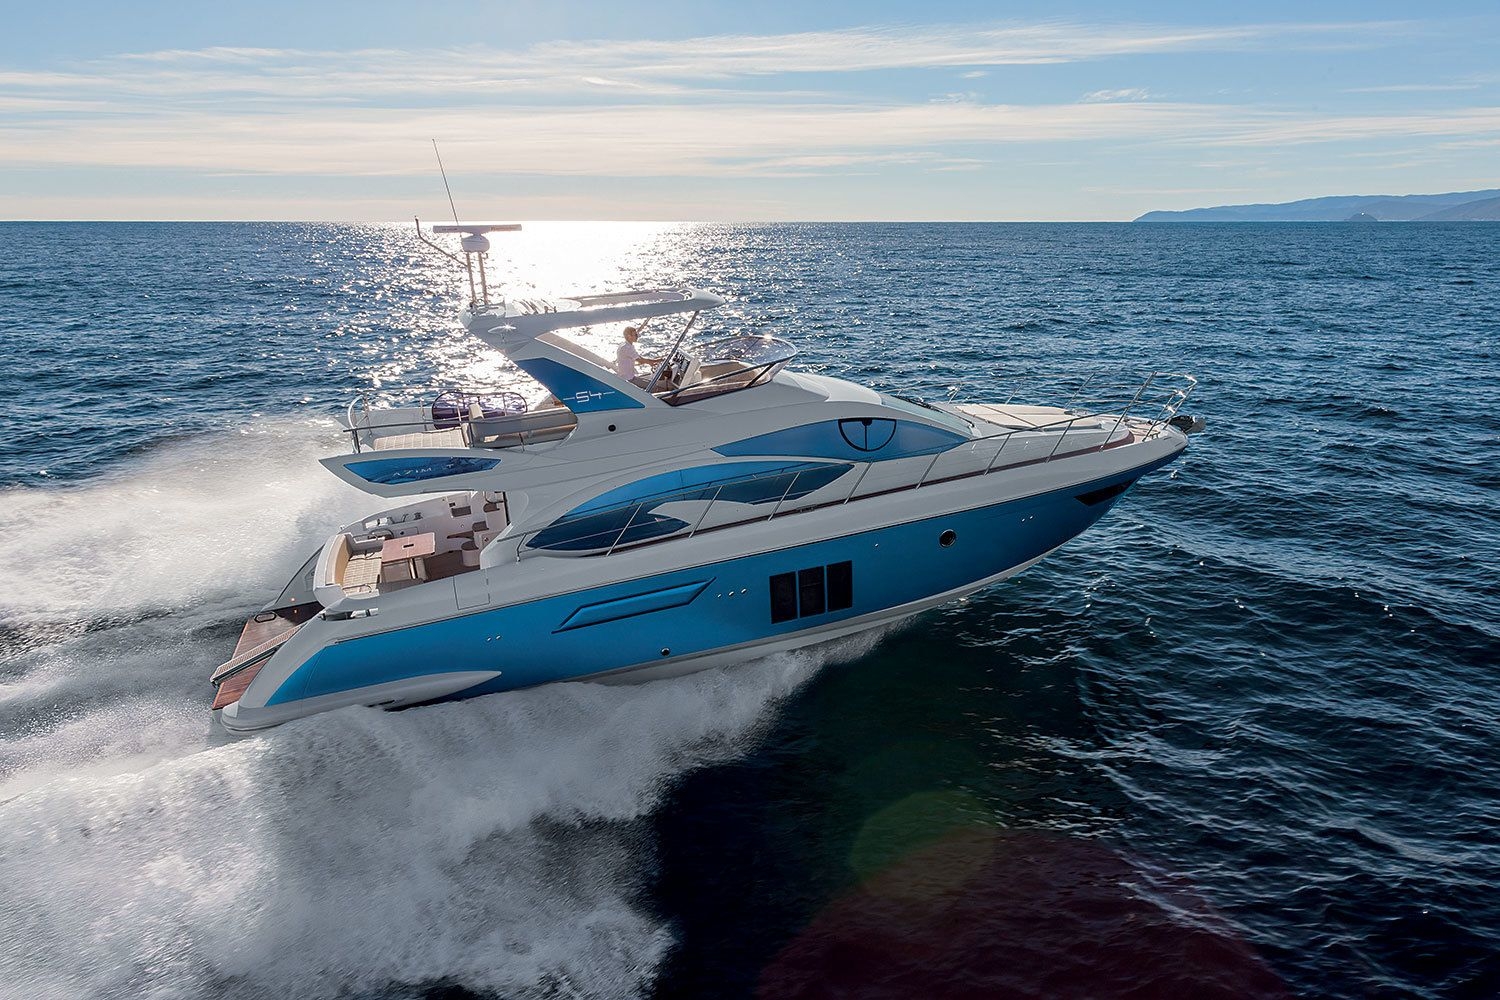 2013 Azimut Yachts 54 Fly